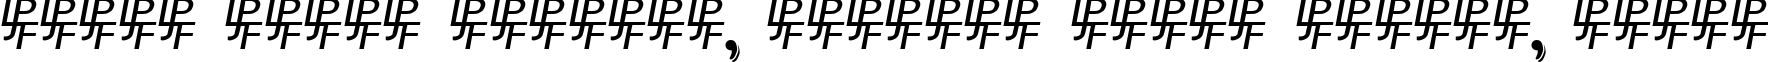 Пример написания шрифтом NewStyle Embossed текста на белорусском